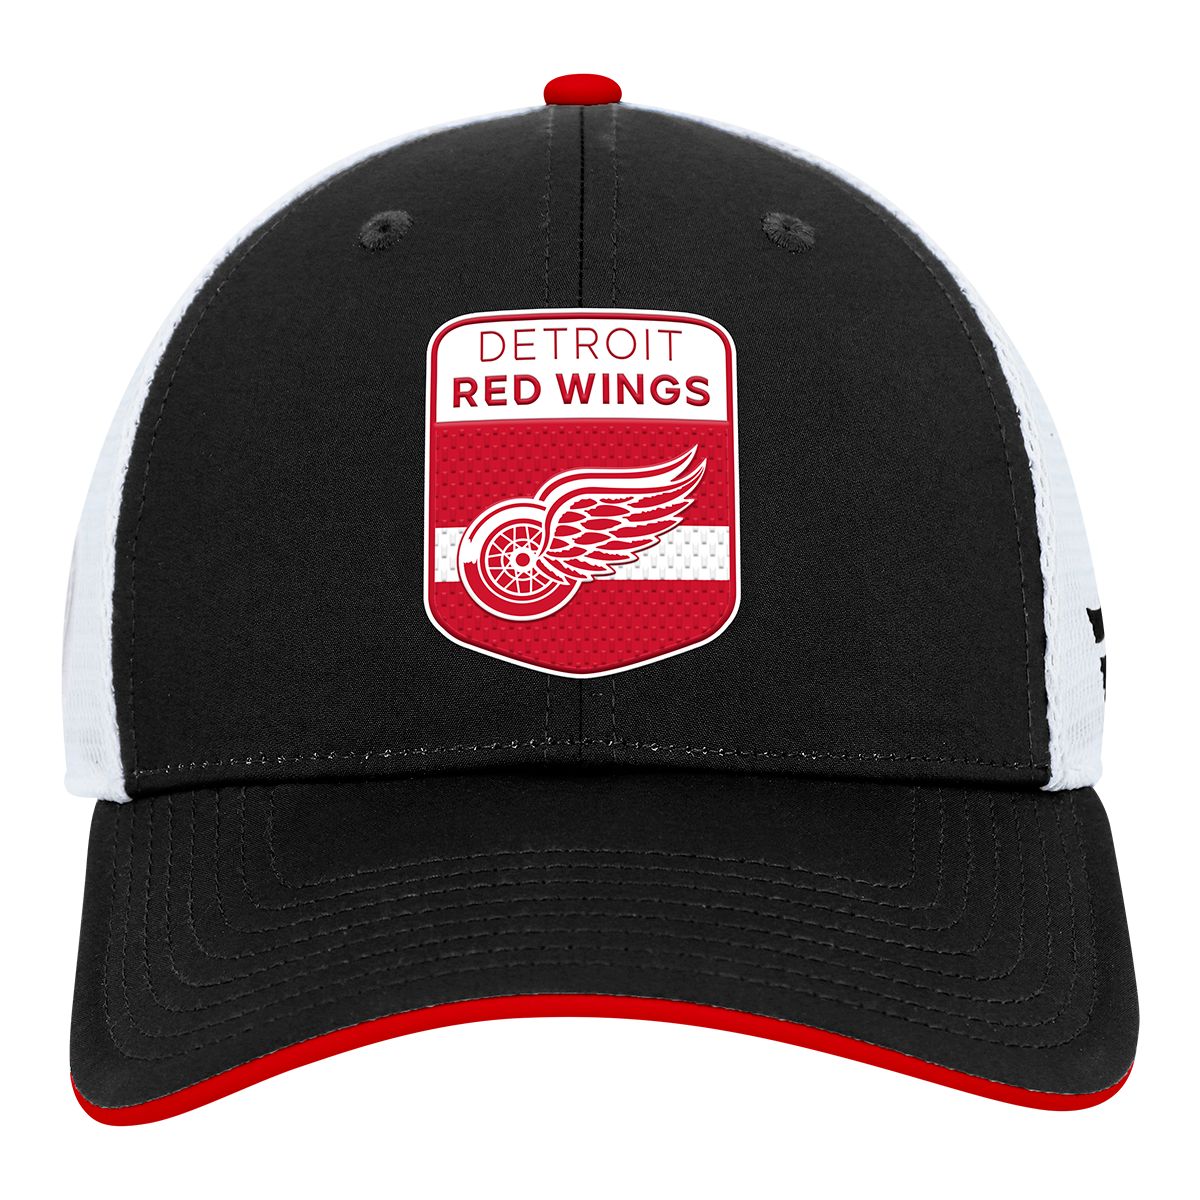 Image of Detroit Red Wings Fanatics Authentic Pro Draft Cap